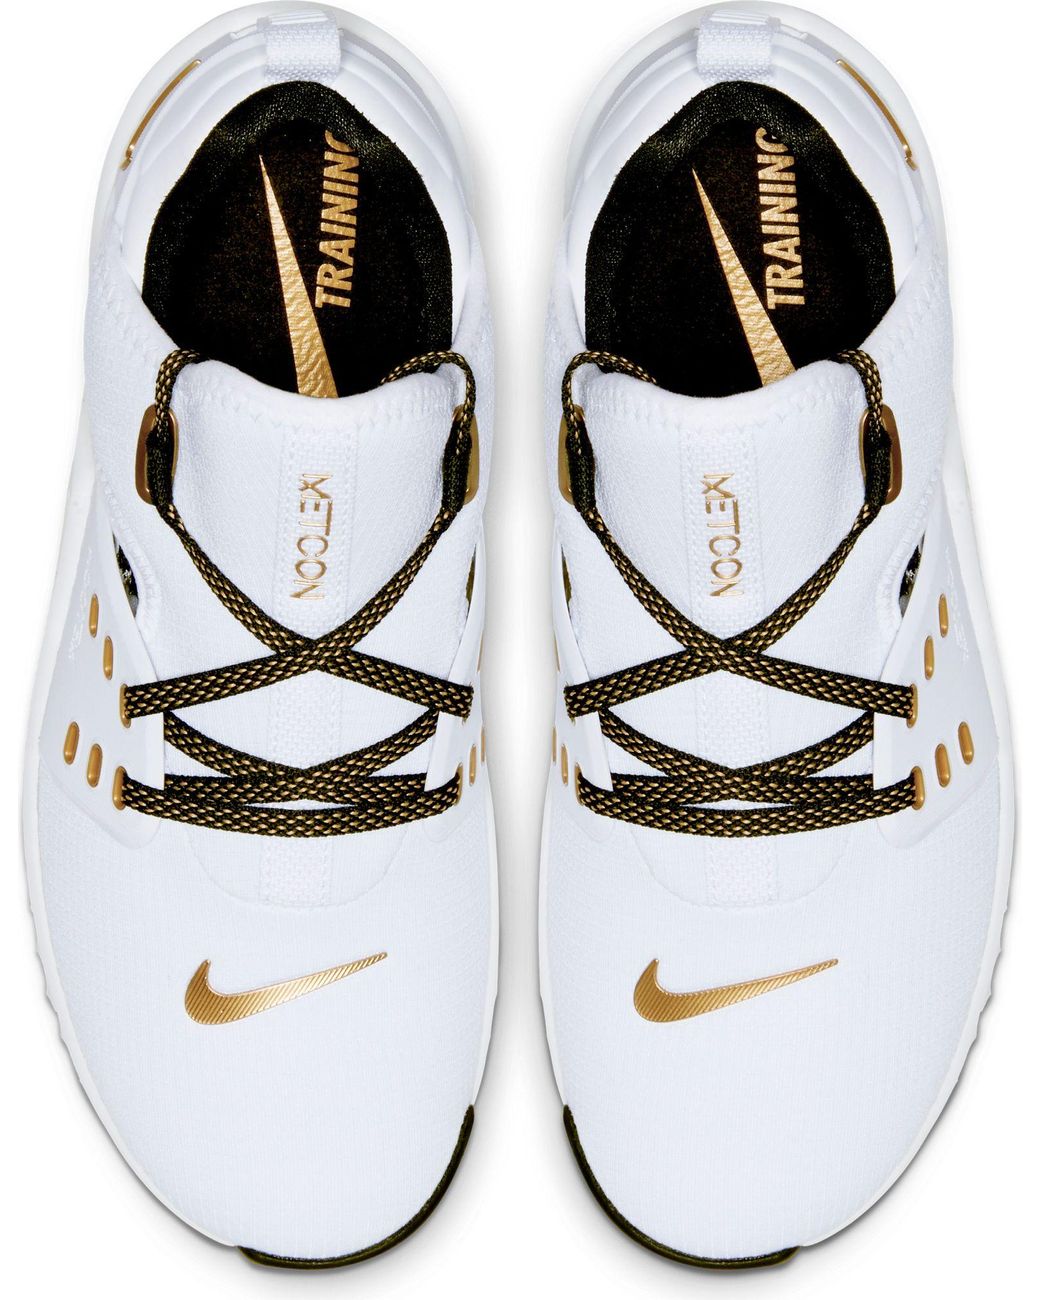 Nike Free X Metcon 2 Training Shoes in White/Metallic Gold/Black (Metallic)  | Lyst